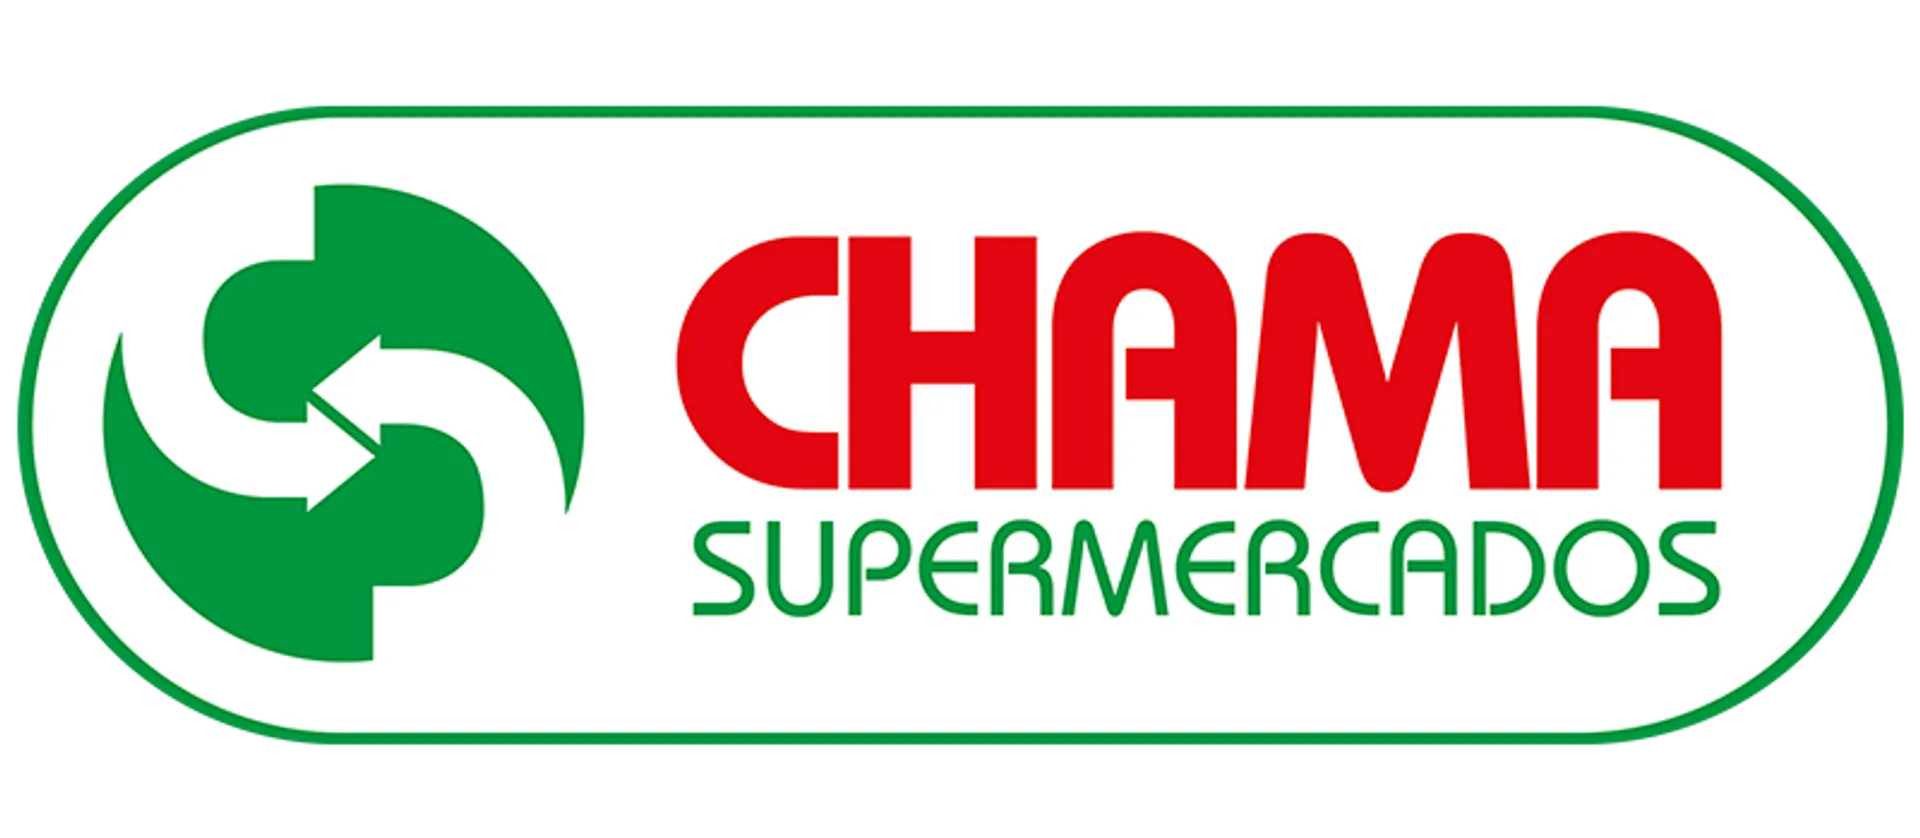 CHAMA SUPERMERCADOS logo